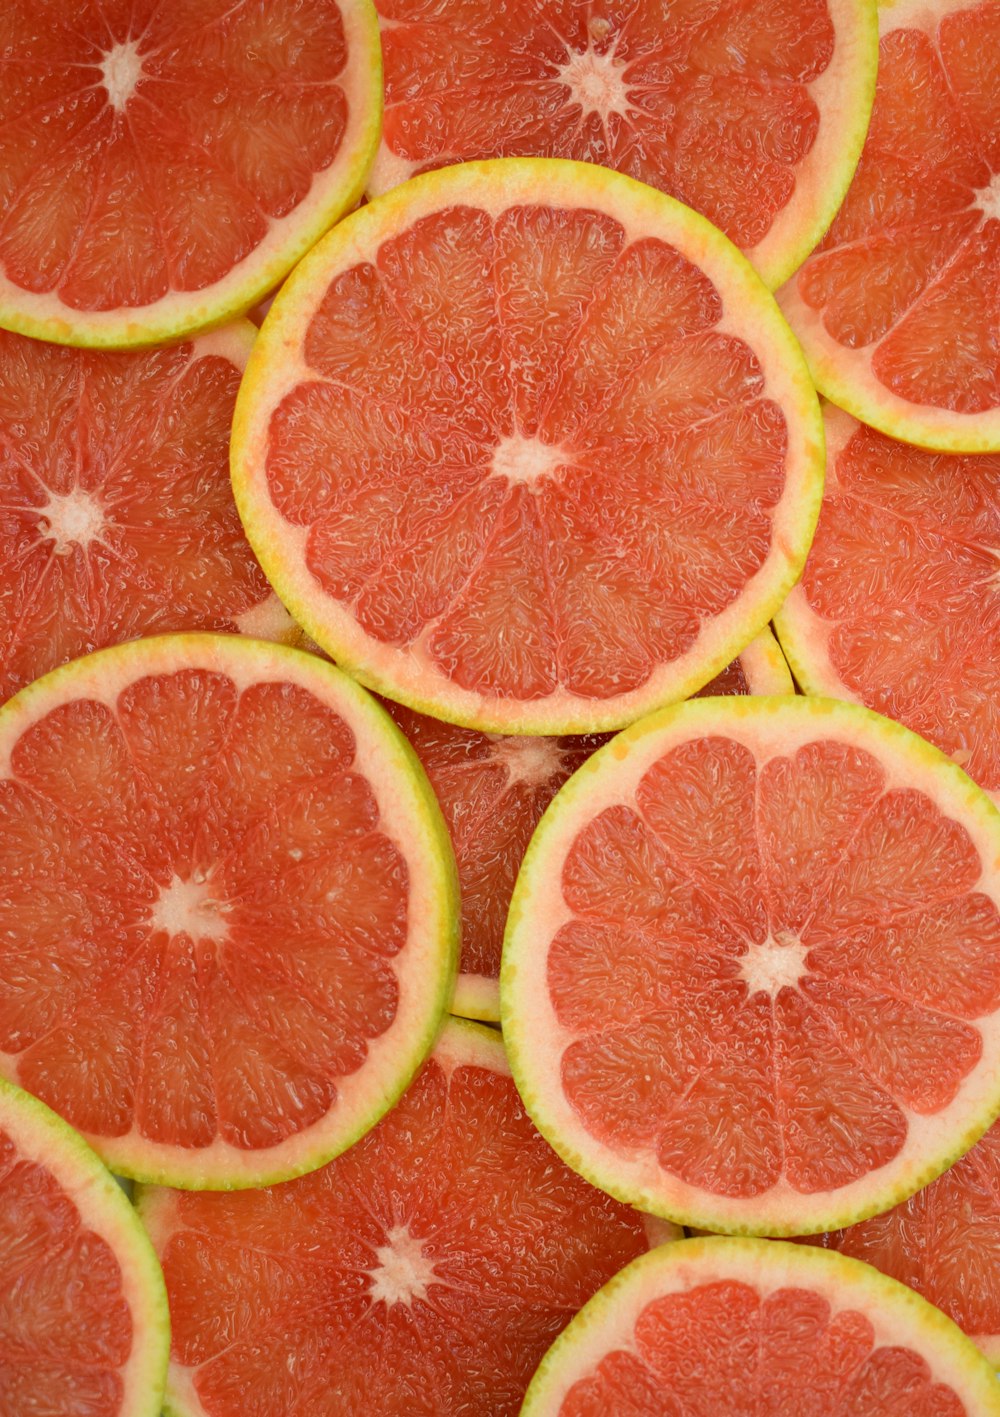 fruta laranja fatiada na superfície vermelha